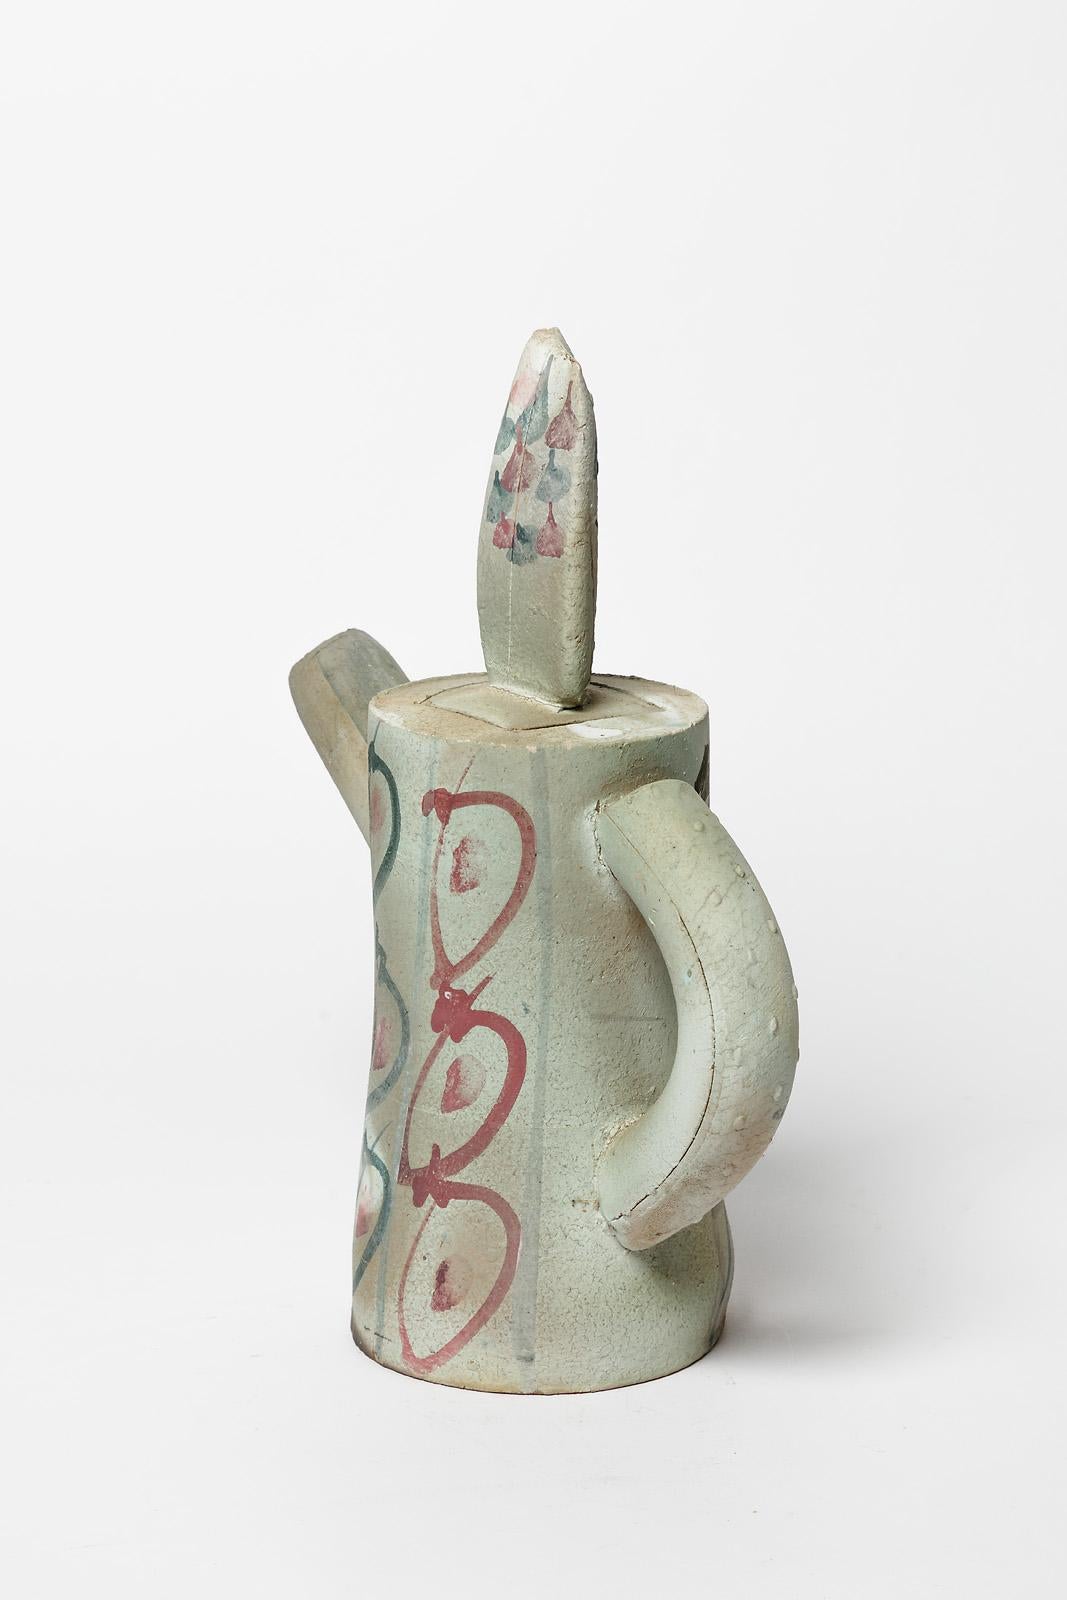 A ceramic tea pot with abstract glaze decoration by David Miller, (1942-2008)
Perfect original conditions.
Unique piece,
Circa 1990.
 
     
 